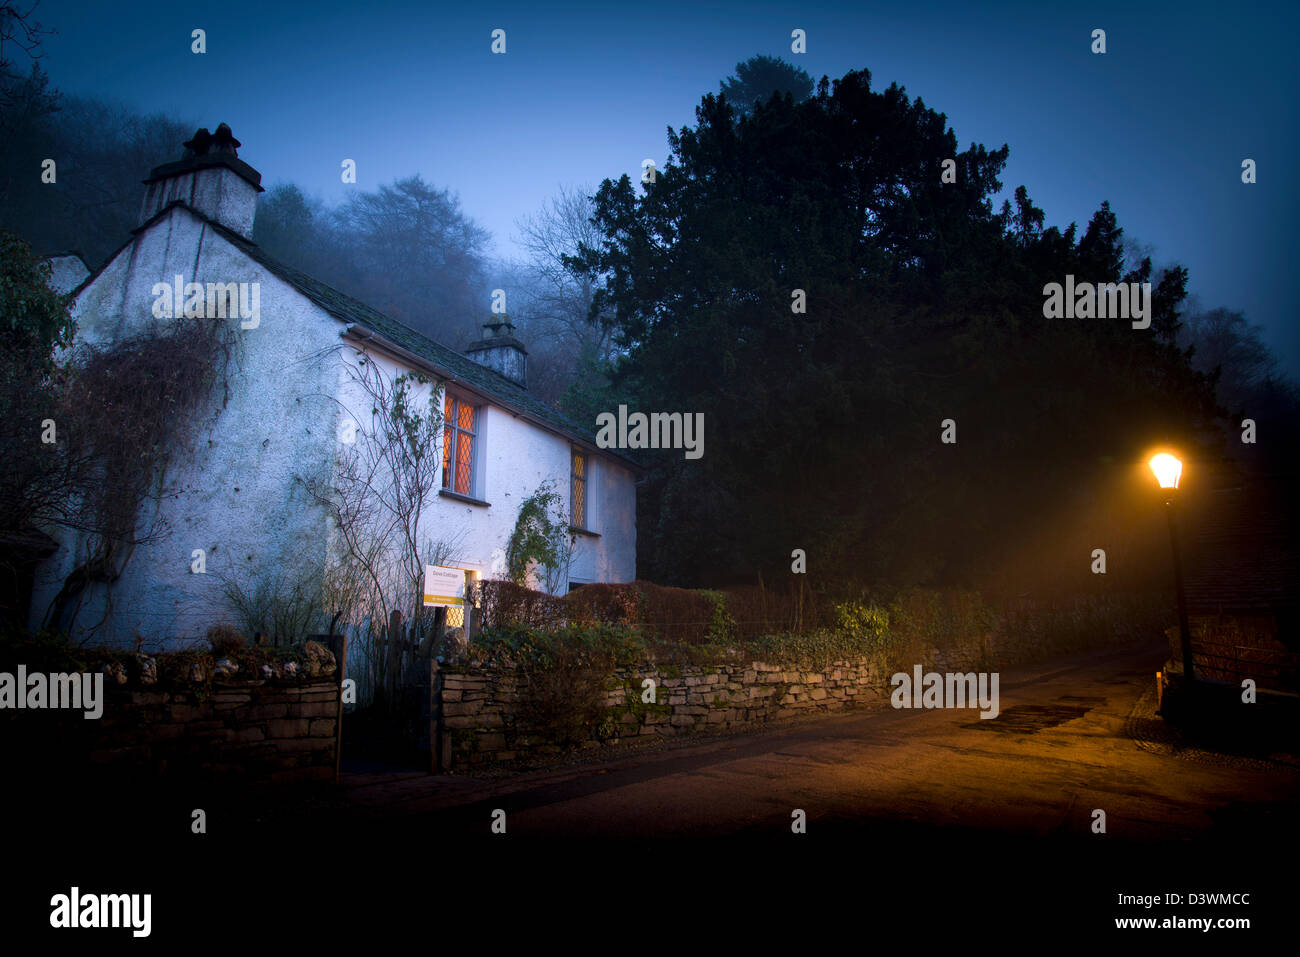 William Wordsworth house Dove Cottage, fog, mist, night, evening, tourism, lonely, Stock Photo